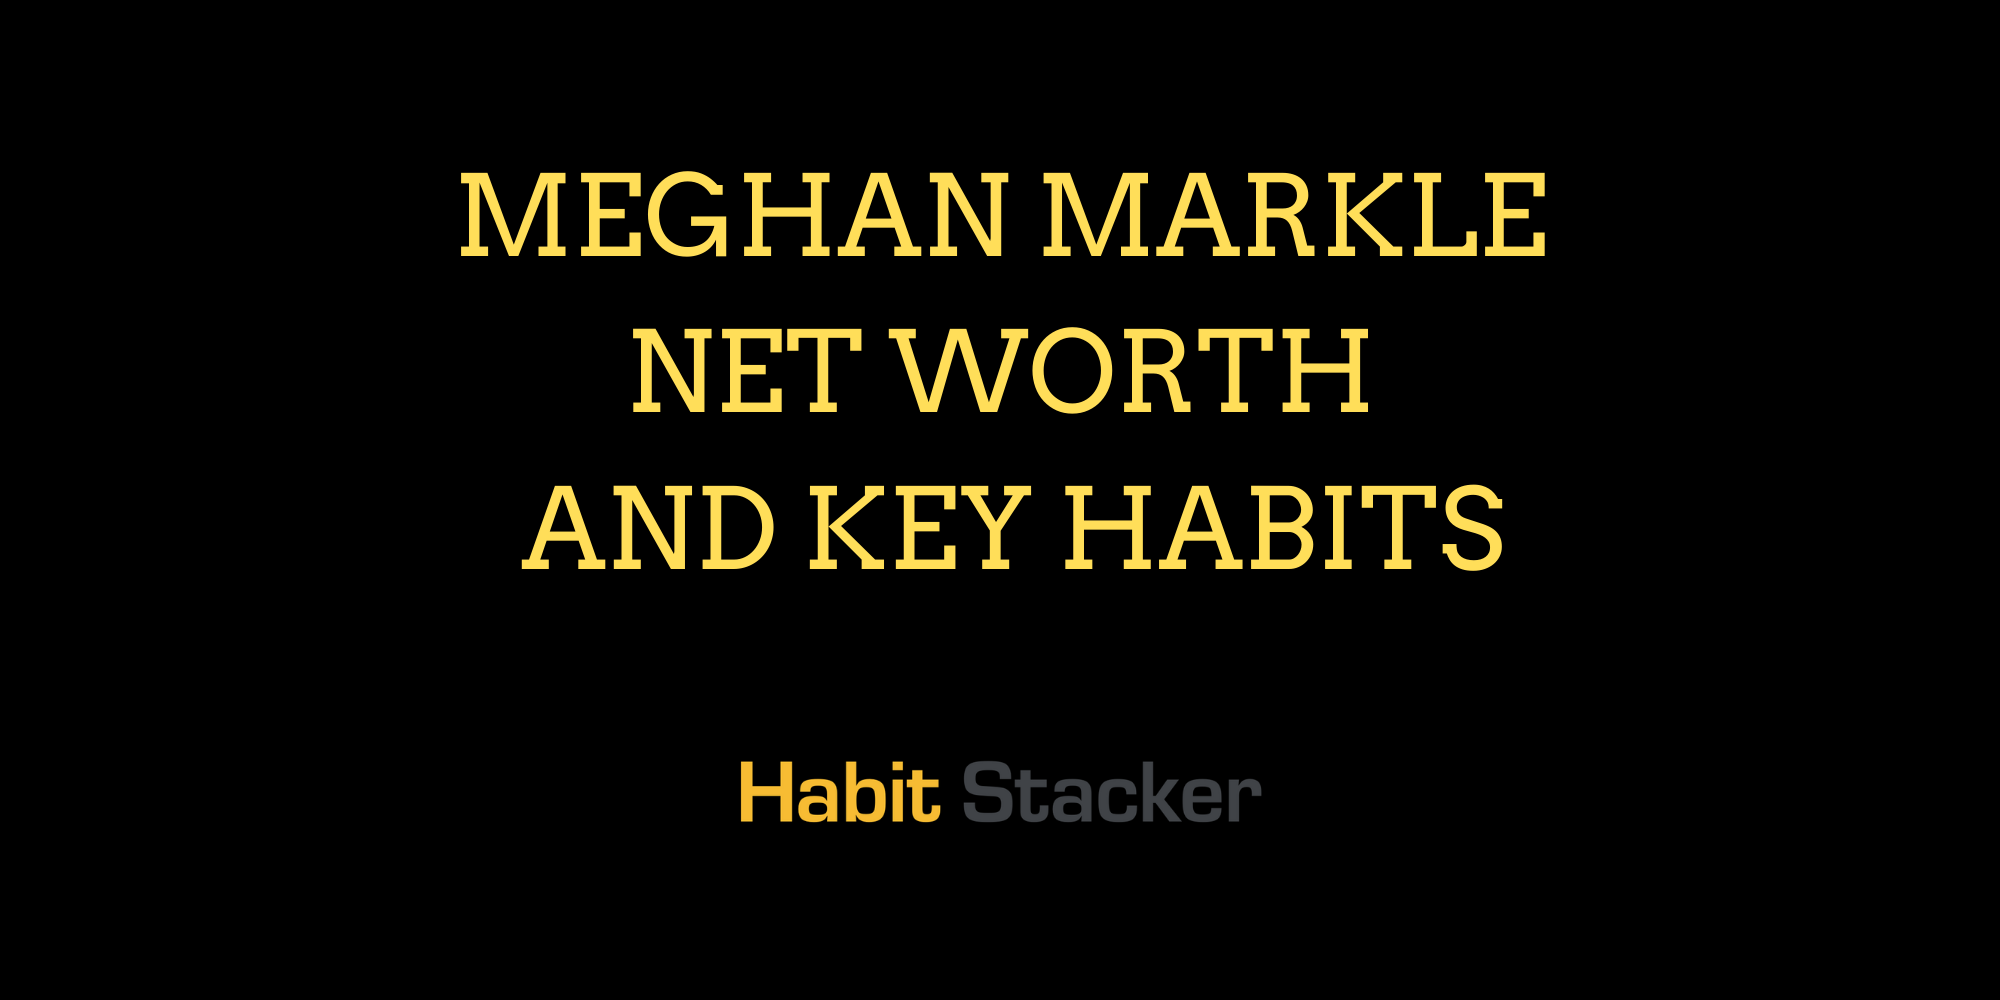 Meghan Markle Net Worth and Key Habits